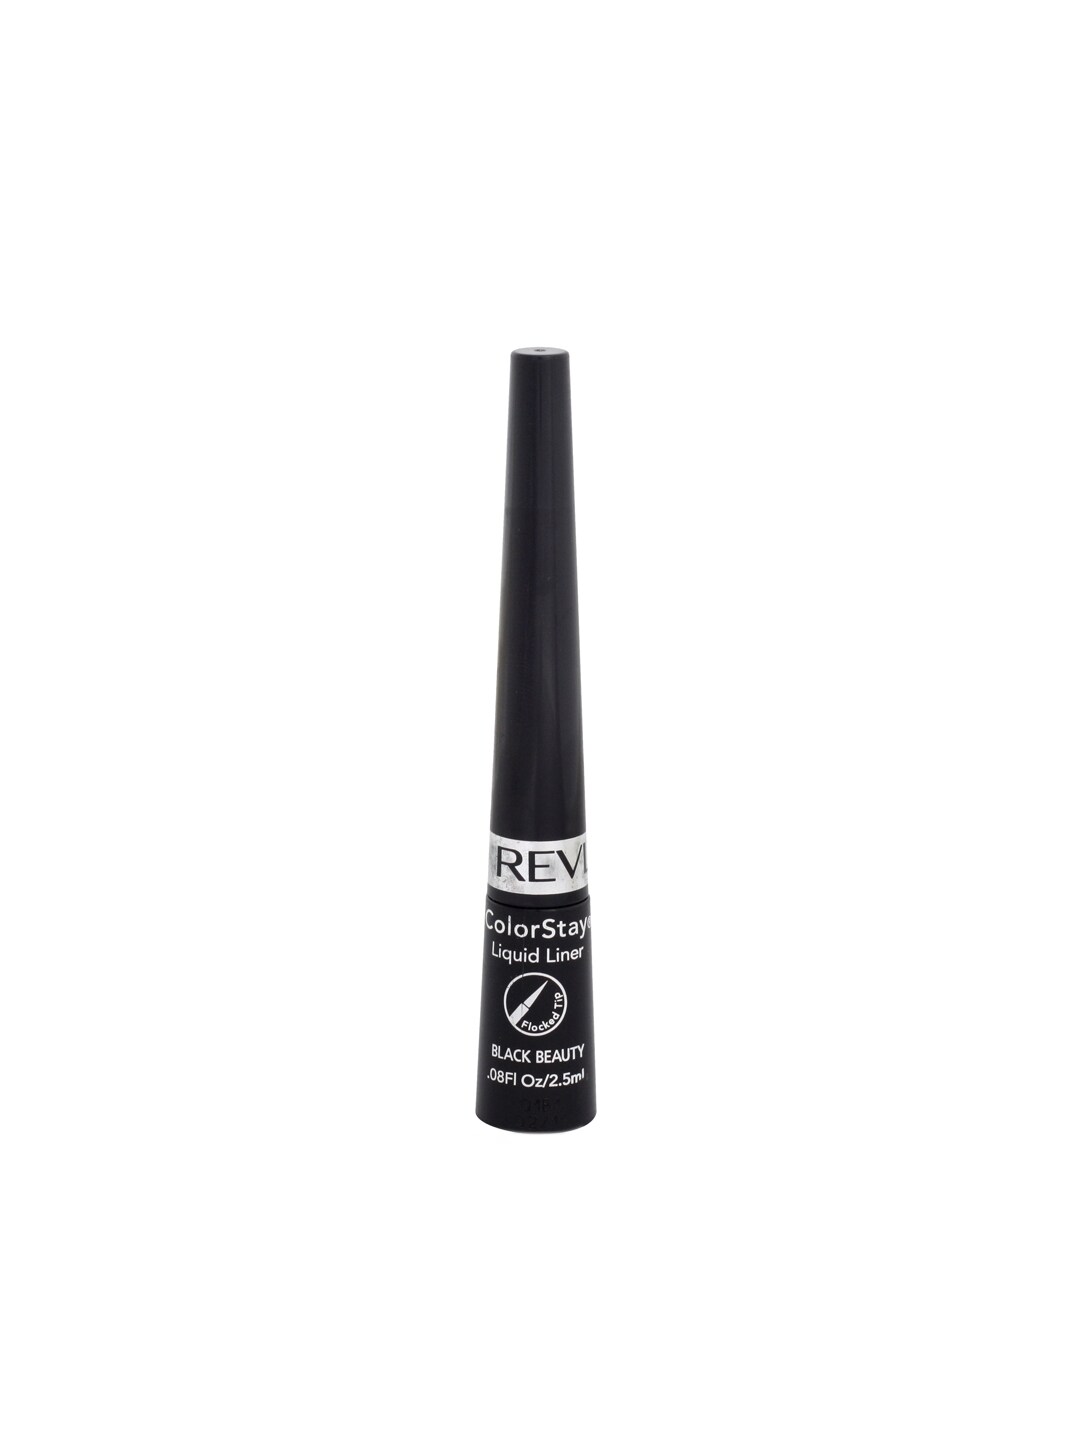 Revlon ColorStay Black Beauty Liquid Eye Liner